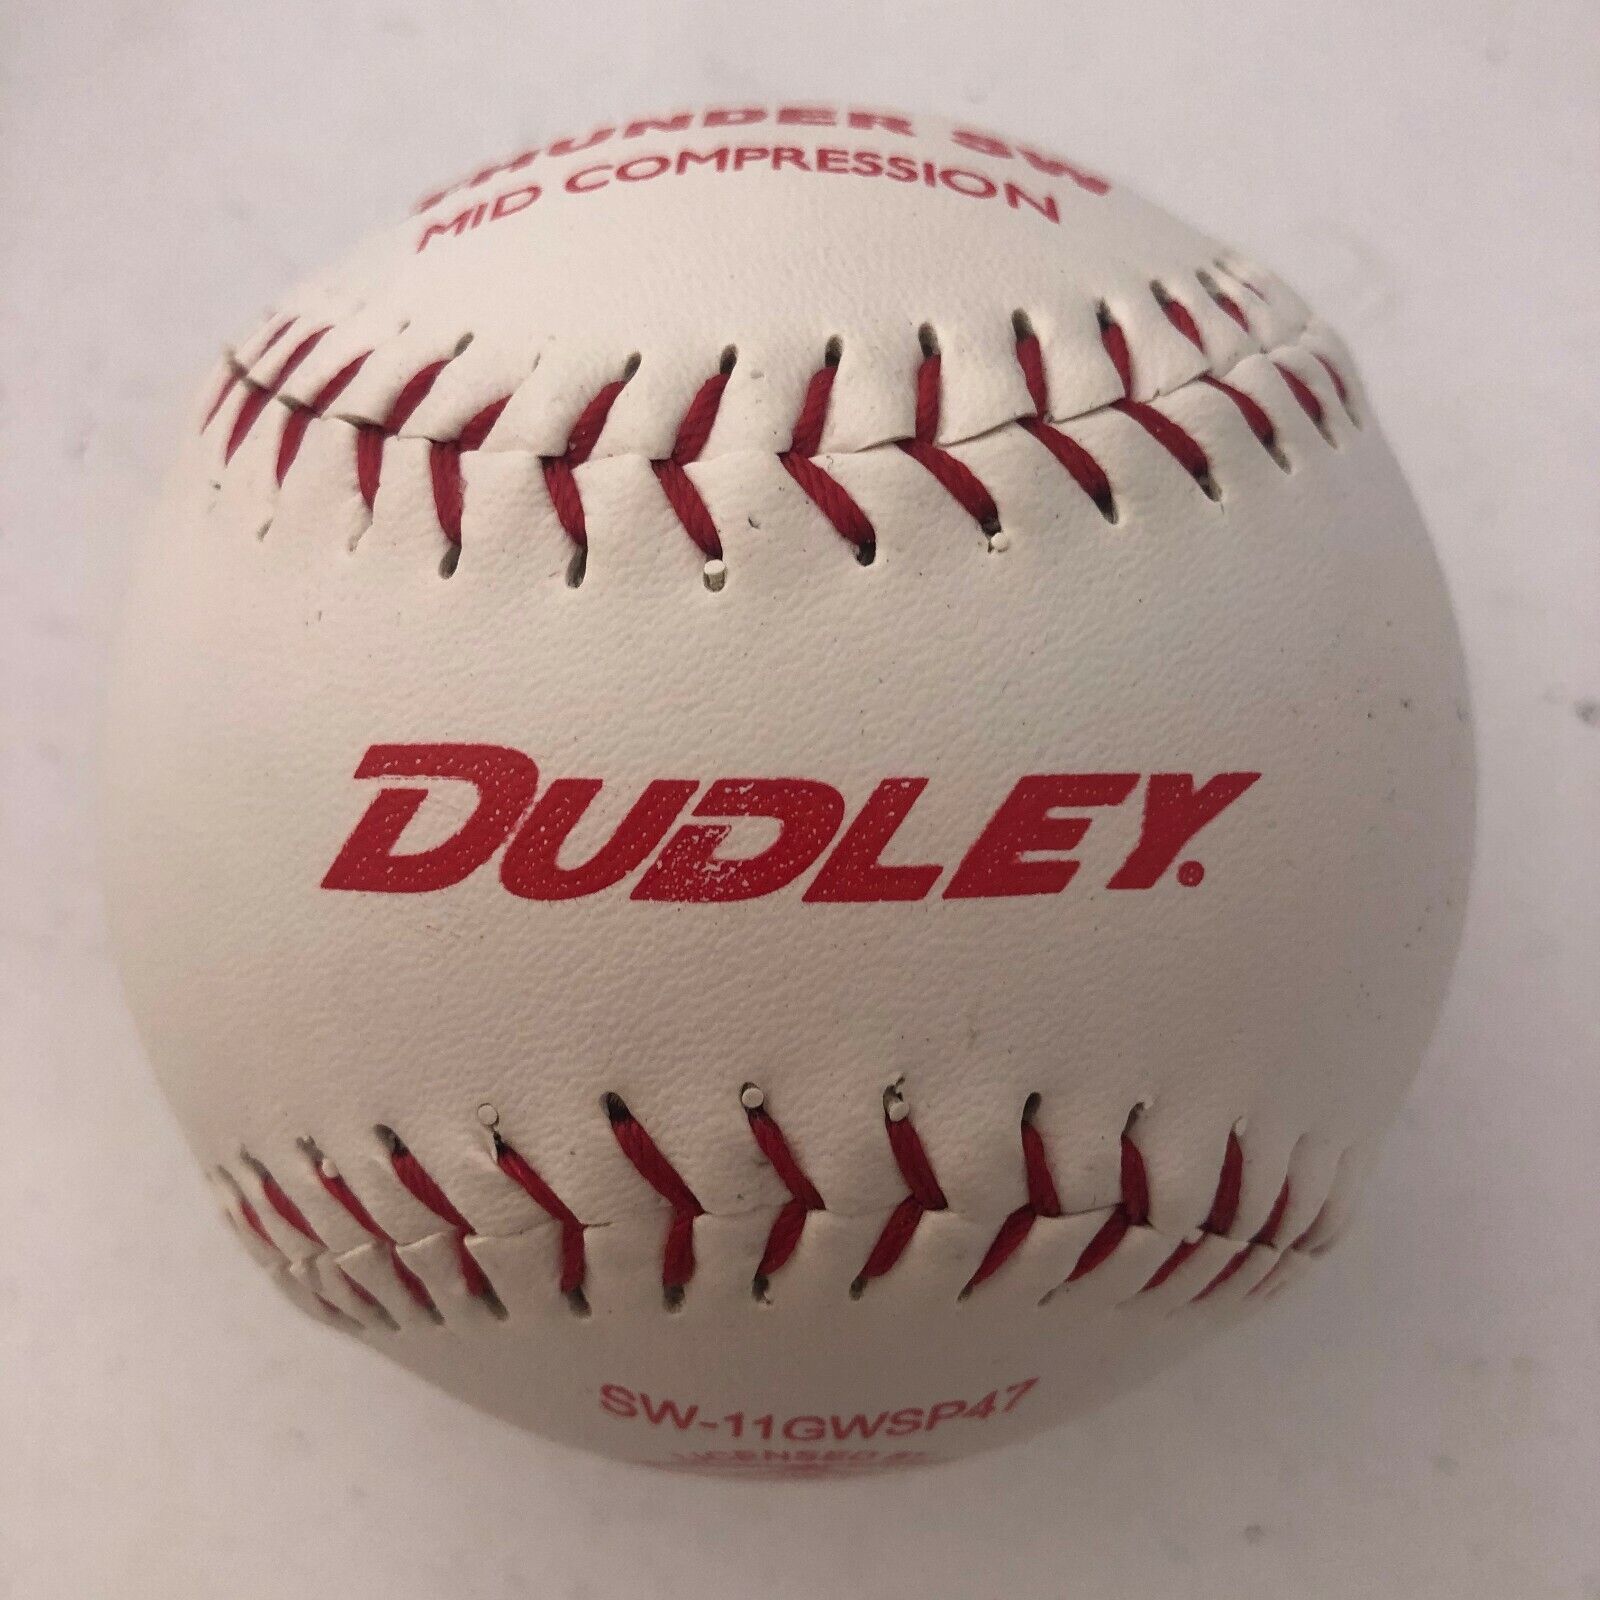 Dudley SY-11GWSP47 Thunder SW Mid Compression White Red Stitch 11" Softball - $0.99